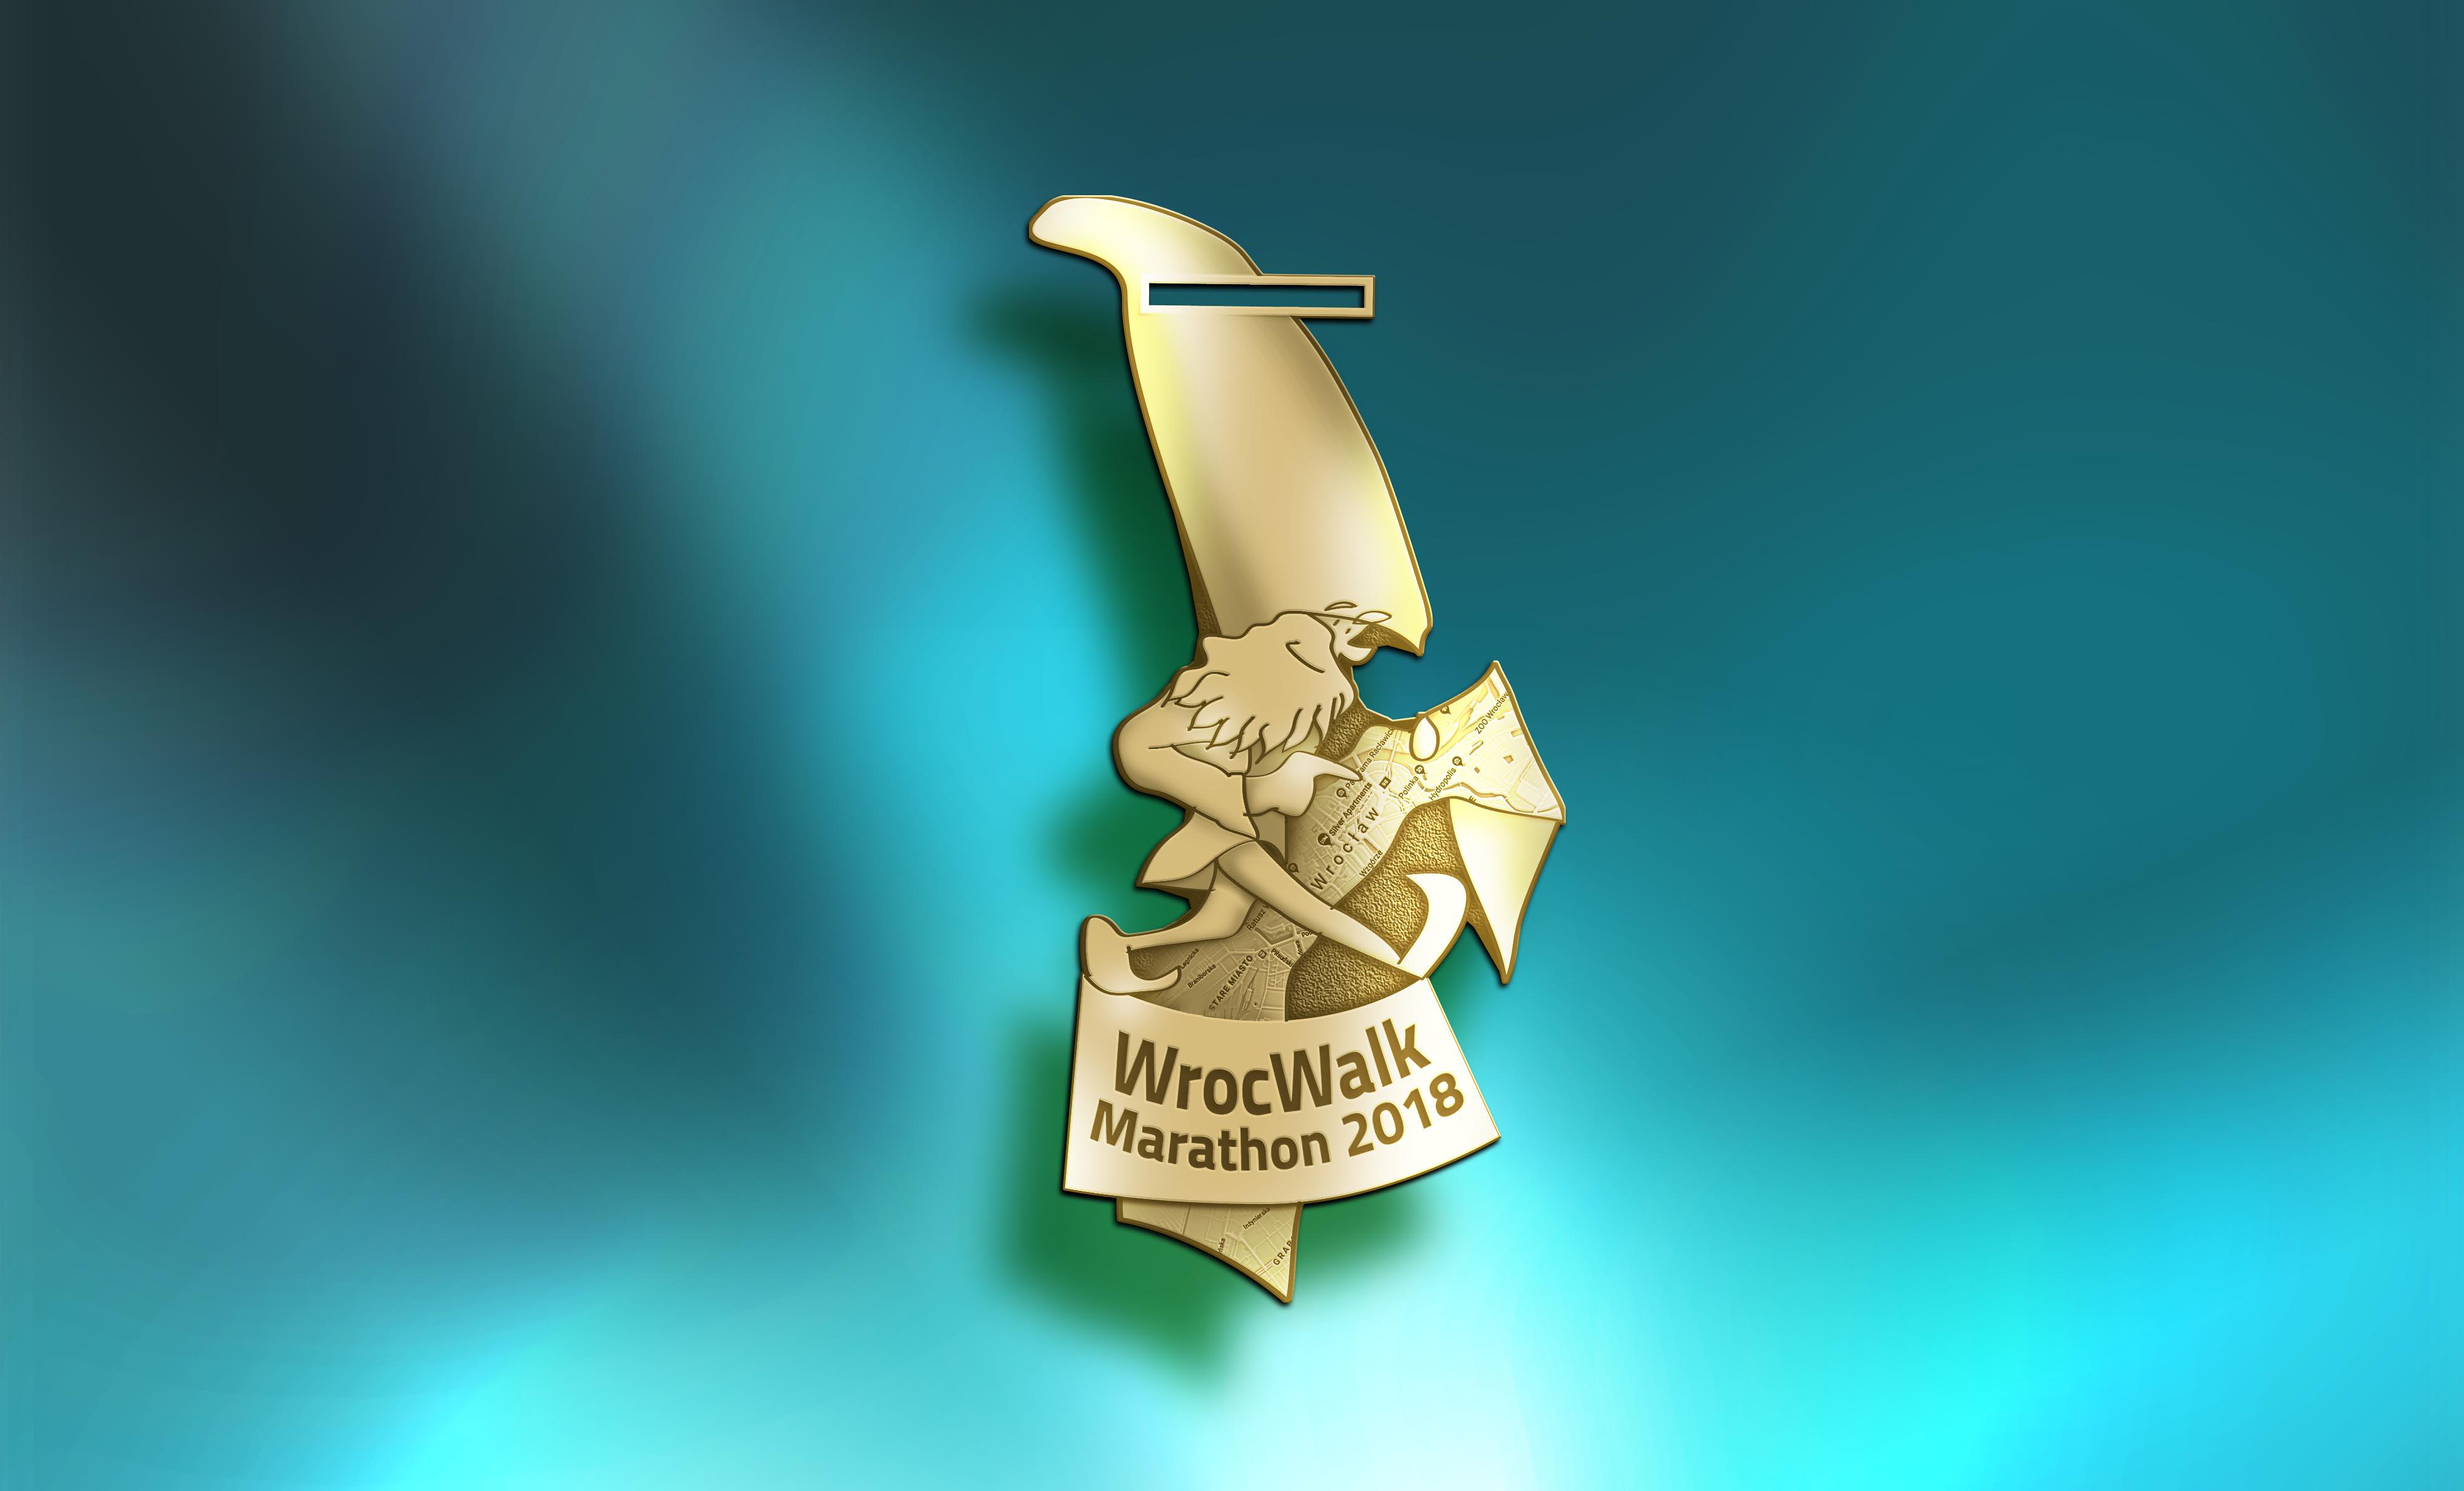 Medal WrocWalk Marathon